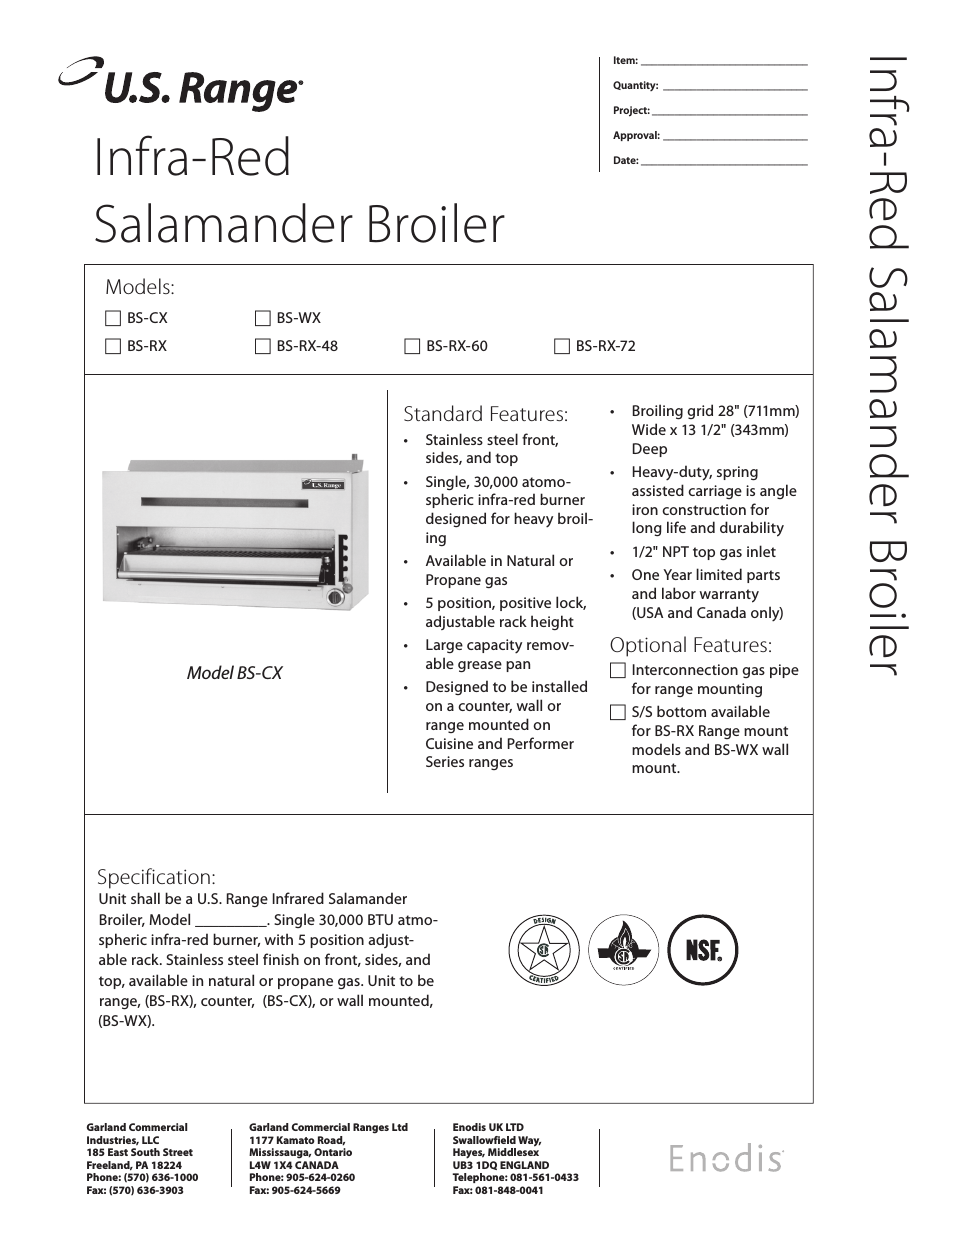 Infra-Red Salamander Broiler BS-CX